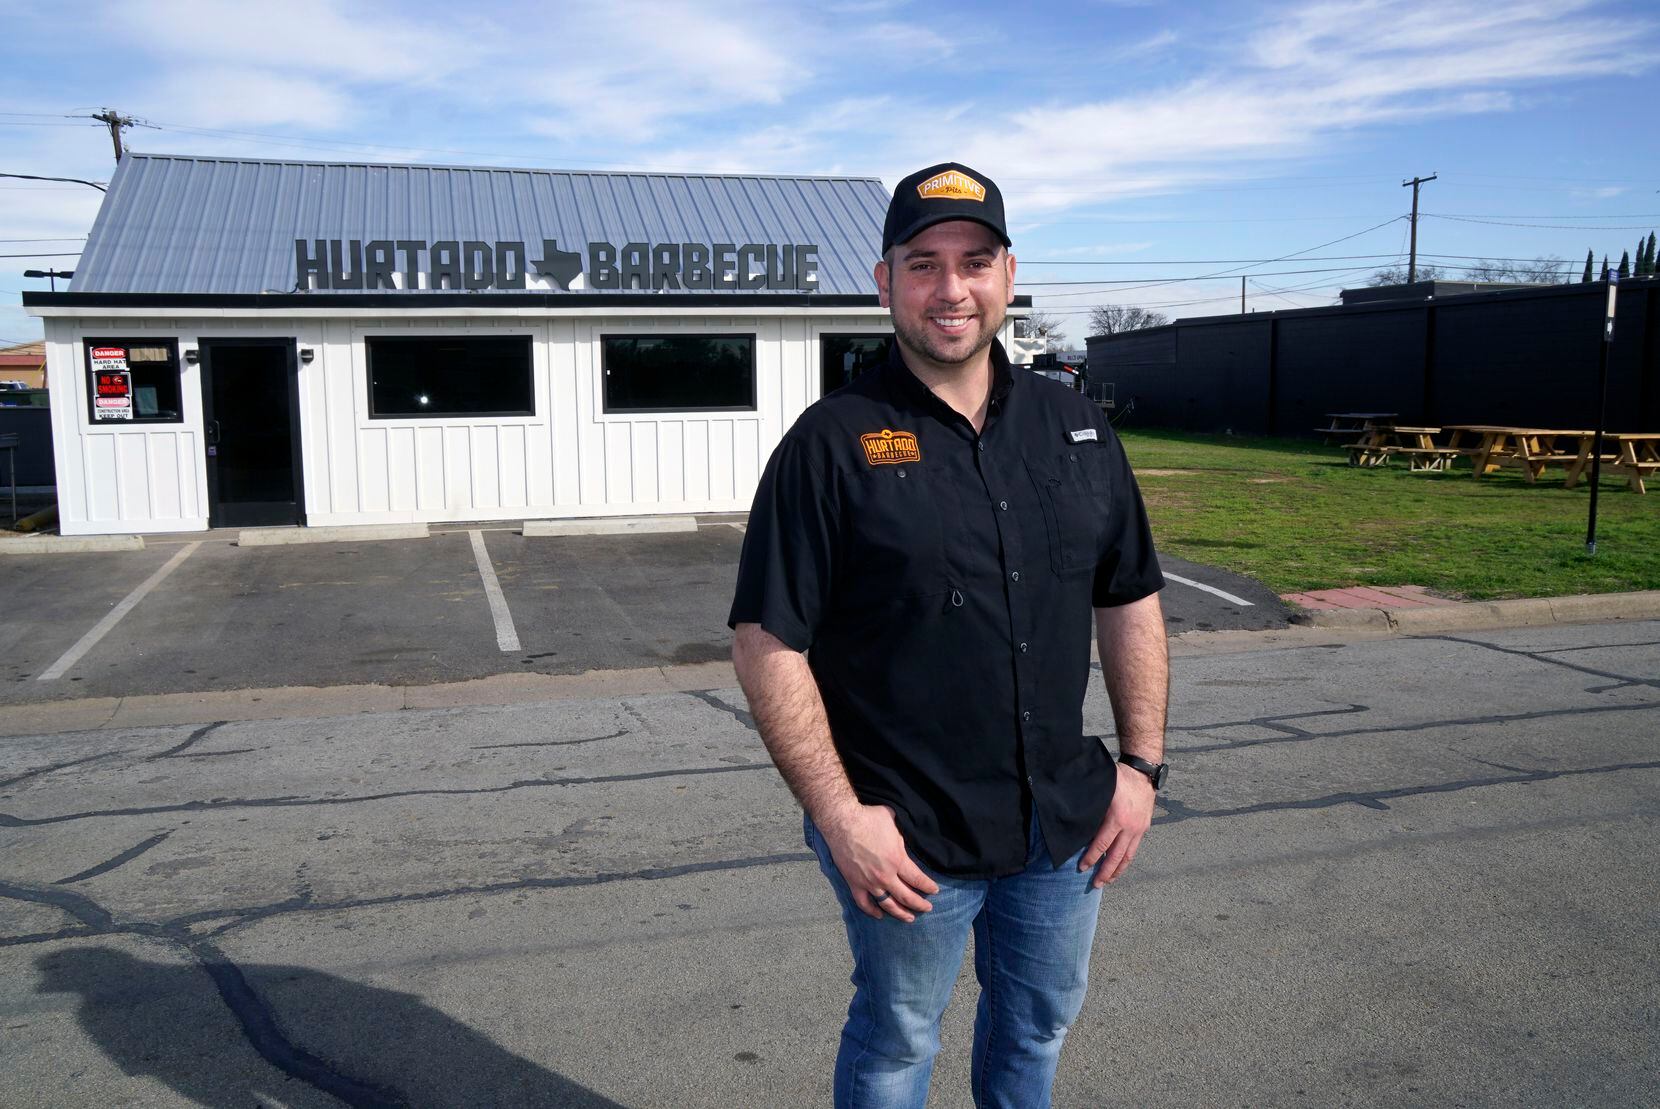 Brandon Hurtado, owner of Hurtado Barbecue in Arlington, Texas, said he has  removed inside...